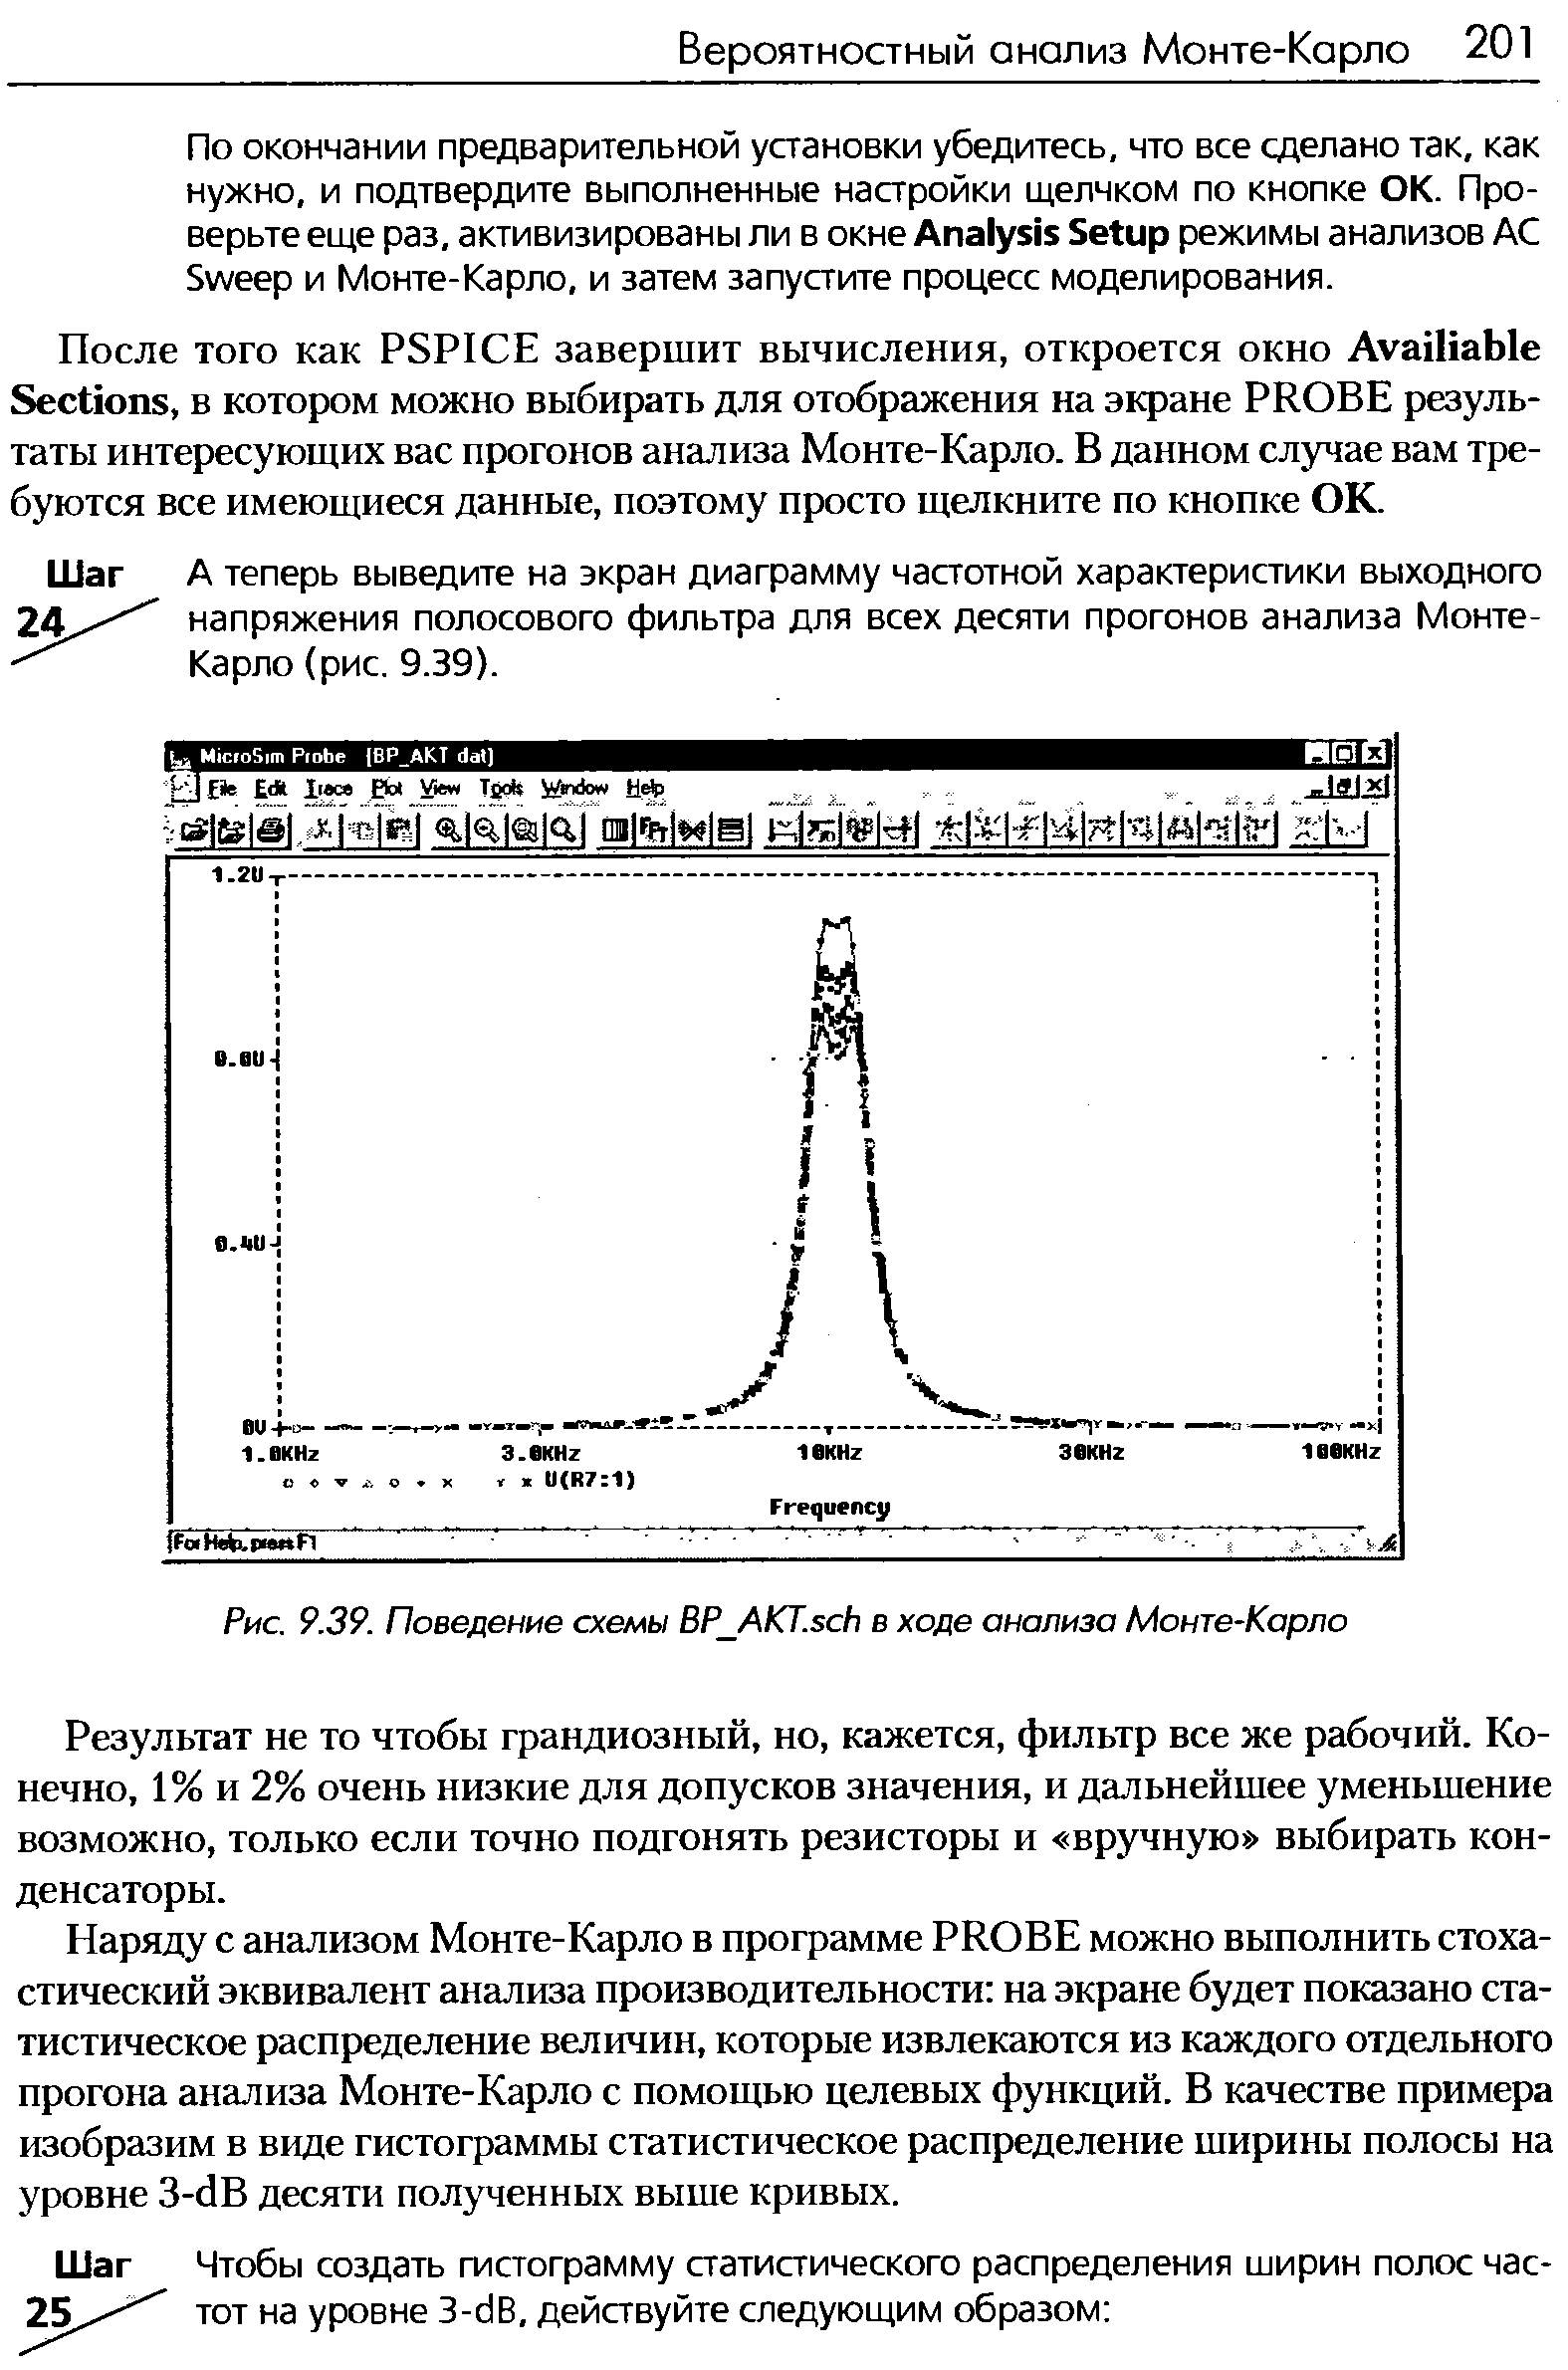 Рис. 9.39. Поведение схемы BP AKT.s h в ходе анализа Монте-Карло
